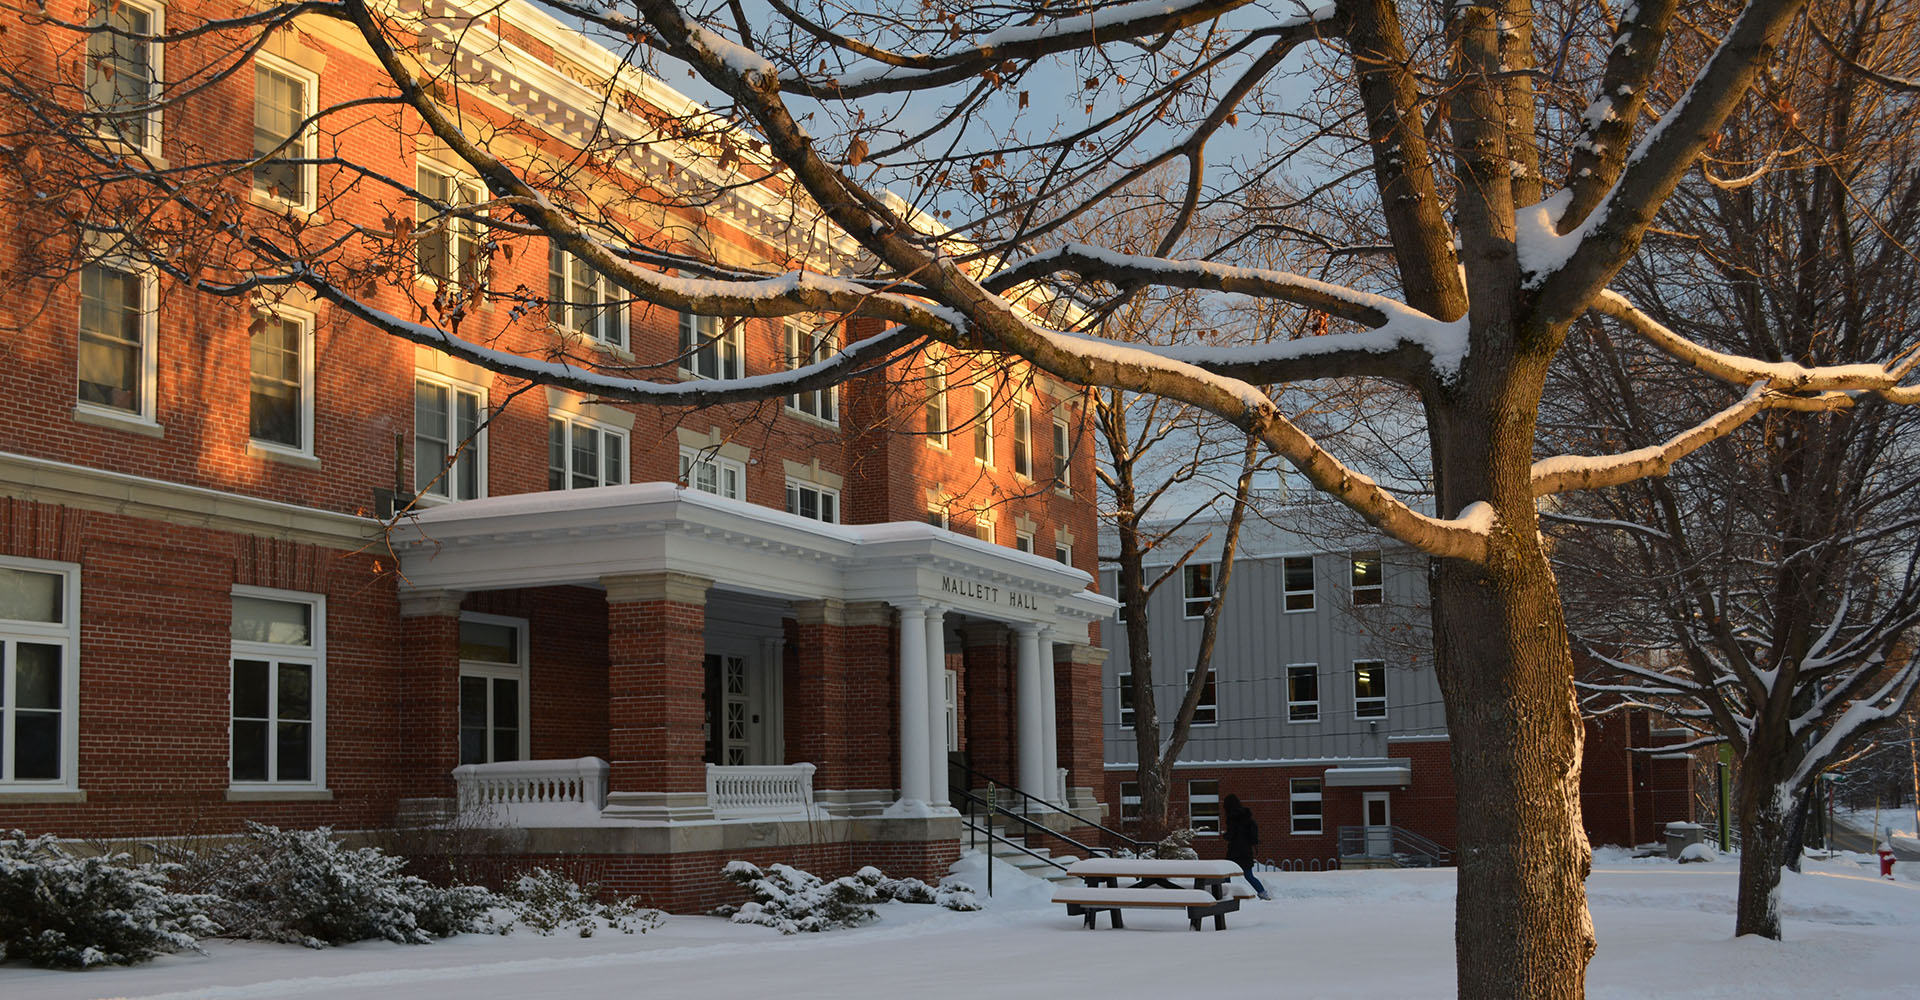 Mallett Hall in the snow